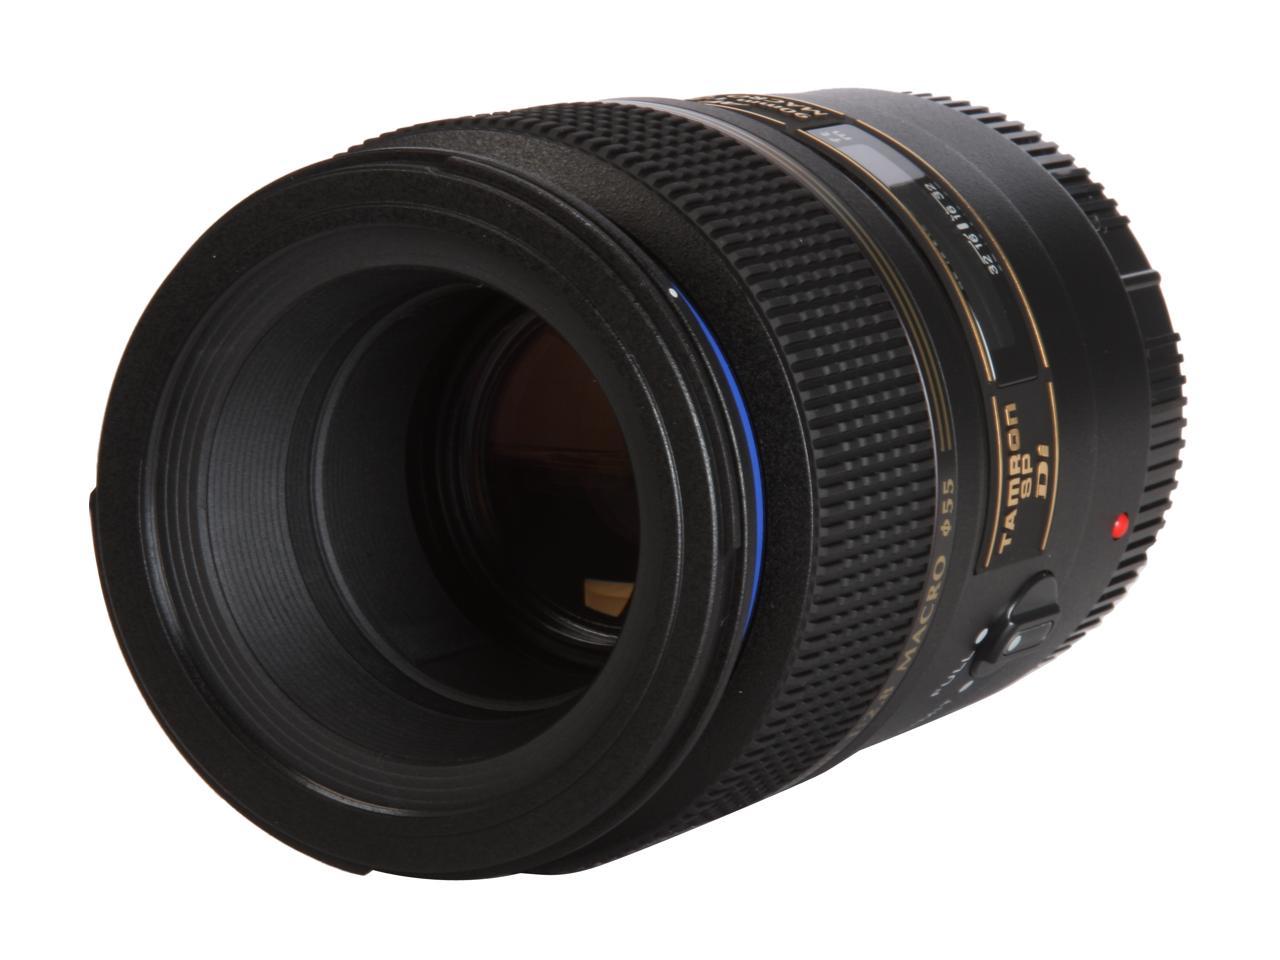 TAMRON SP AF 90mm F/2.8 Di Macro 1:1 Lens for Canon Digital SLR Cameras